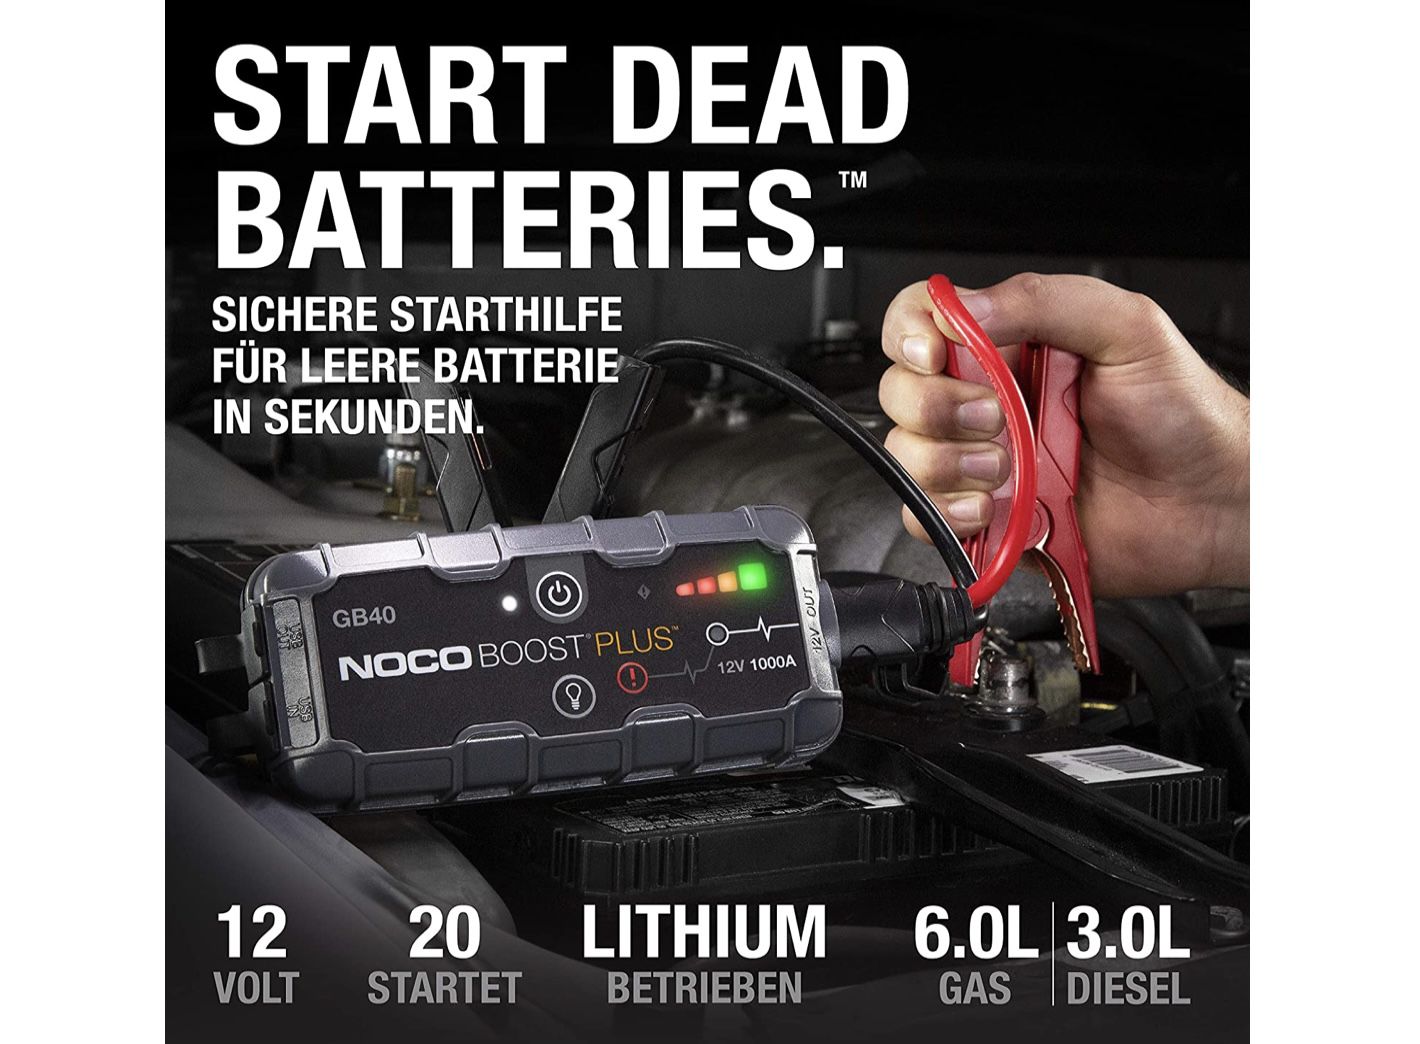 NOCO Boost Plus GB40 1000A 12V UltraSafe Starthilfe für 98,99€ (statt 129€)